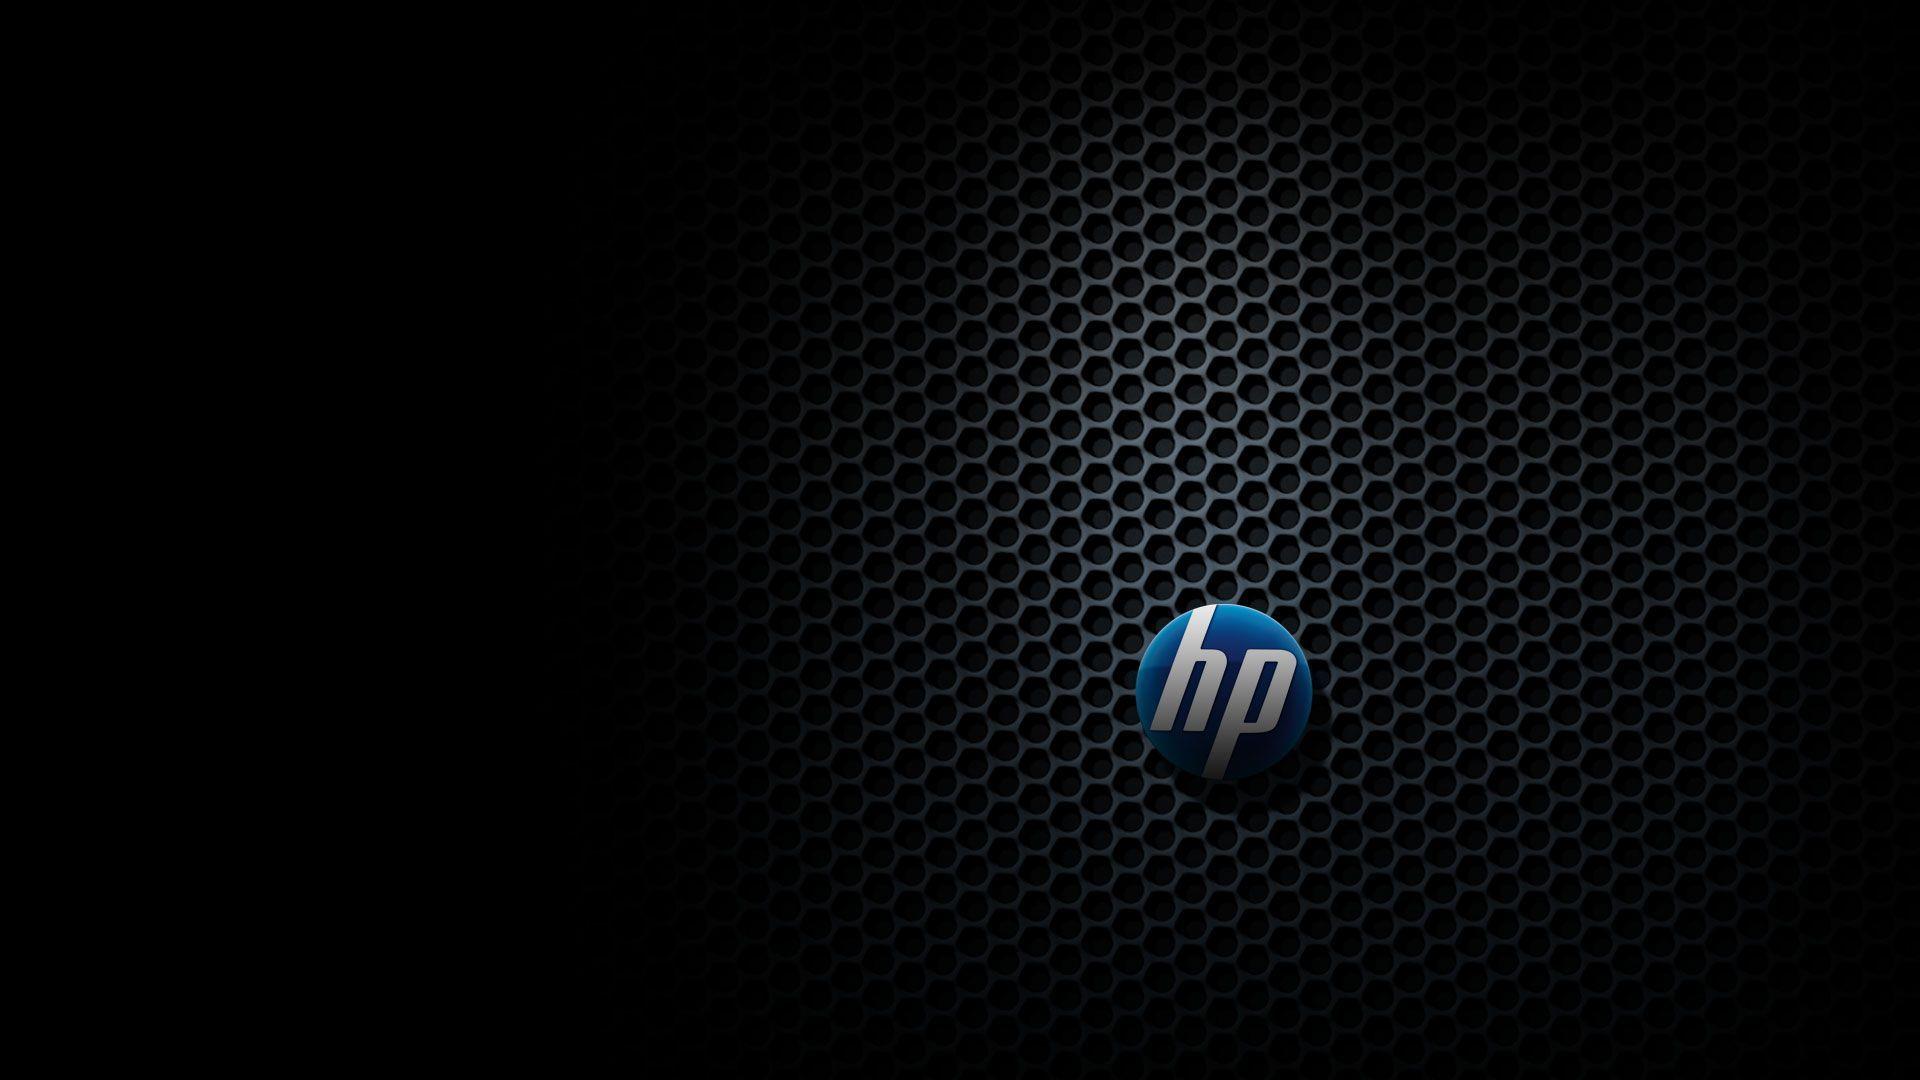 HP Laptop Wallpapers - Wallpaper Cave